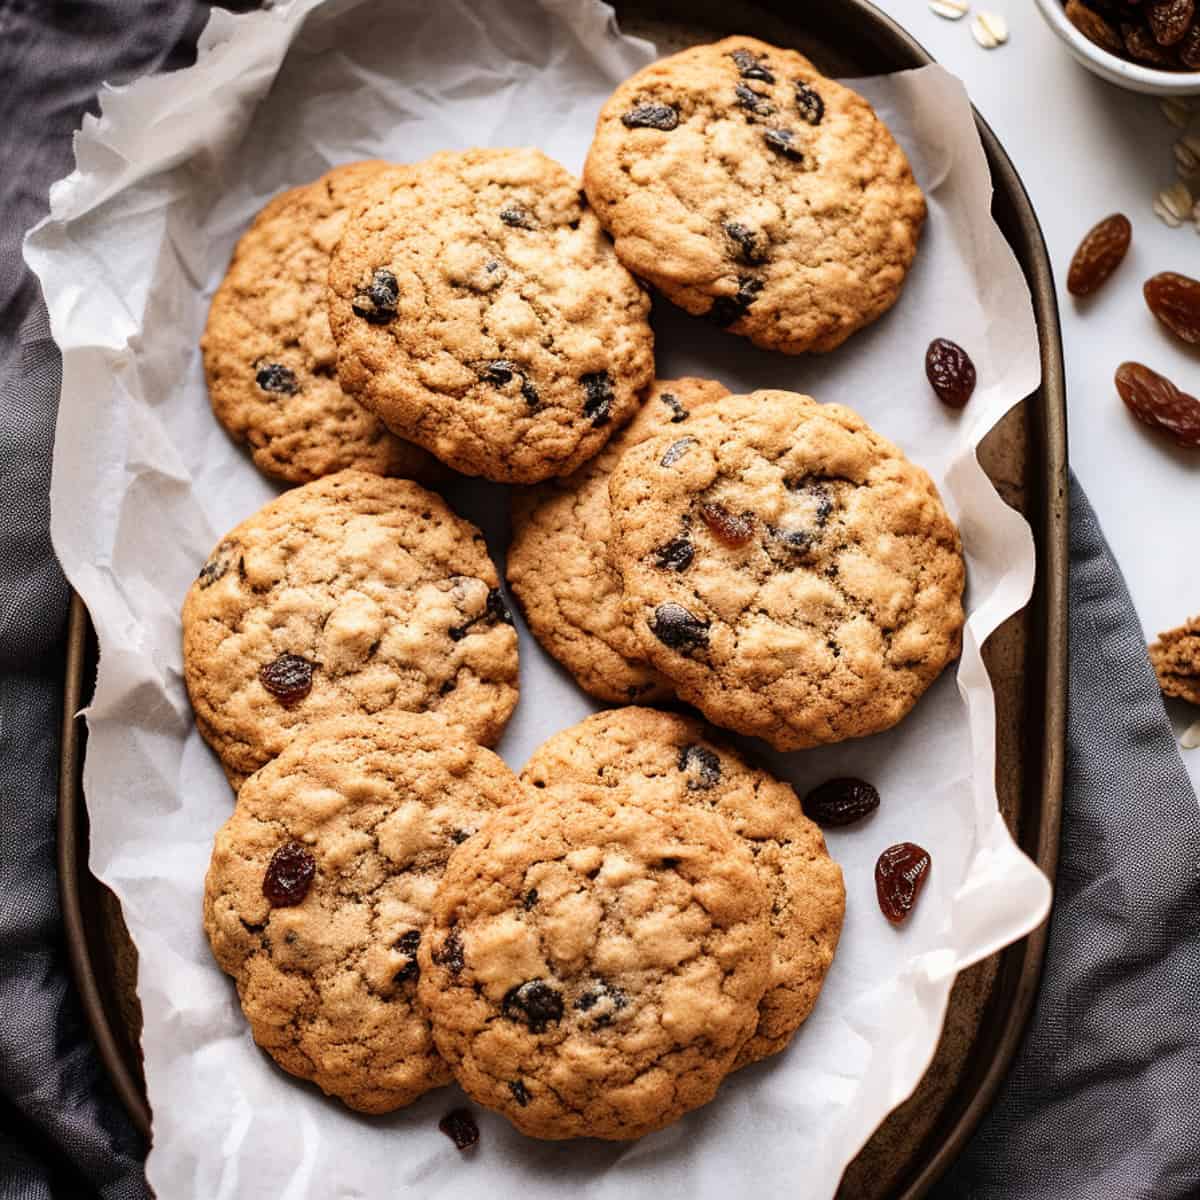 Oatmeal raisin cookies on a baking tray.